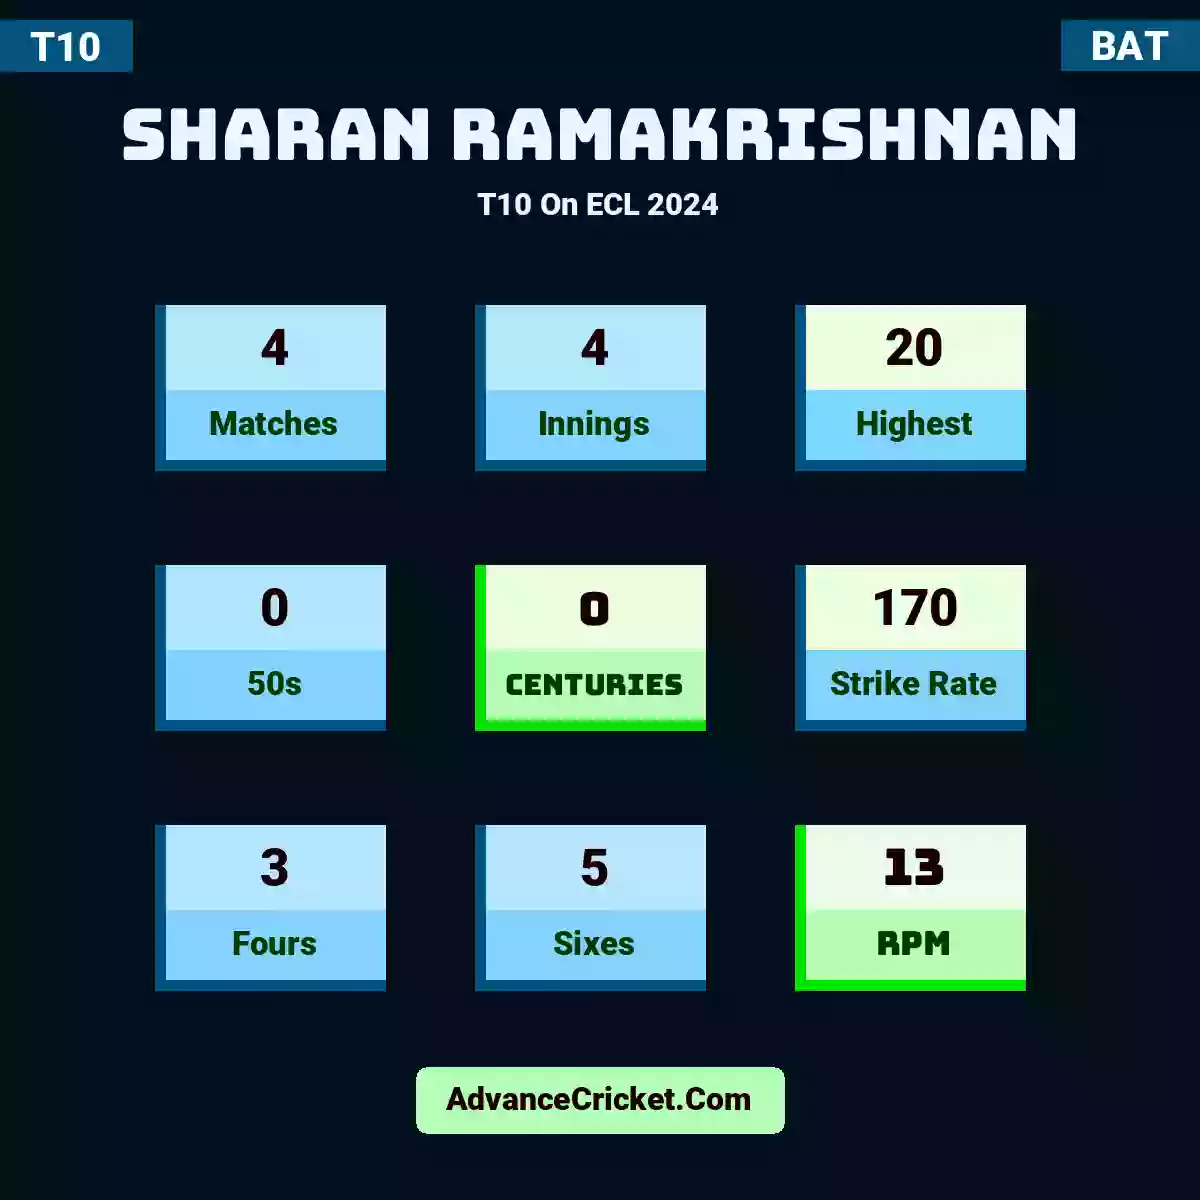 Sharan Ramakrishnan T10  On ECL 2024, Sharan Ramakrishnan played 4 matches, scored 20 runs as highest, 0 half-centuries, and 0 centuries, with a strike rate of 170. S.Ramakrishnan hit 3 fours and 5 sixes, with an RPM of 13.